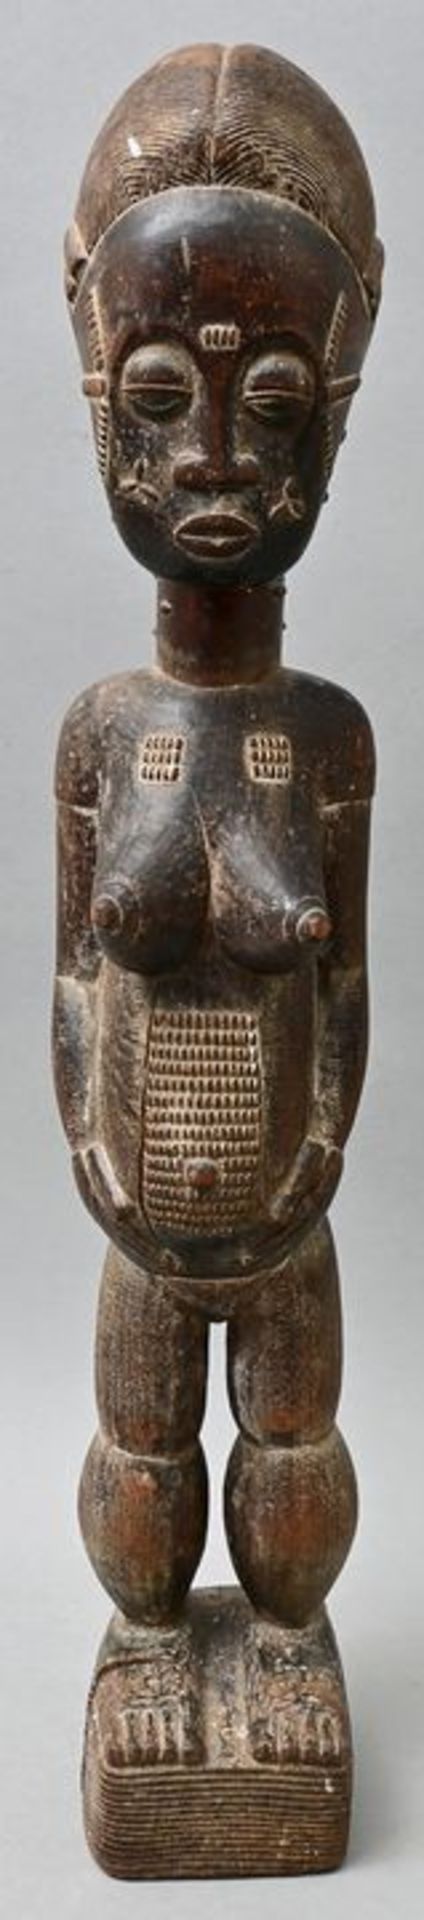 Weibliche Figur/ female statue